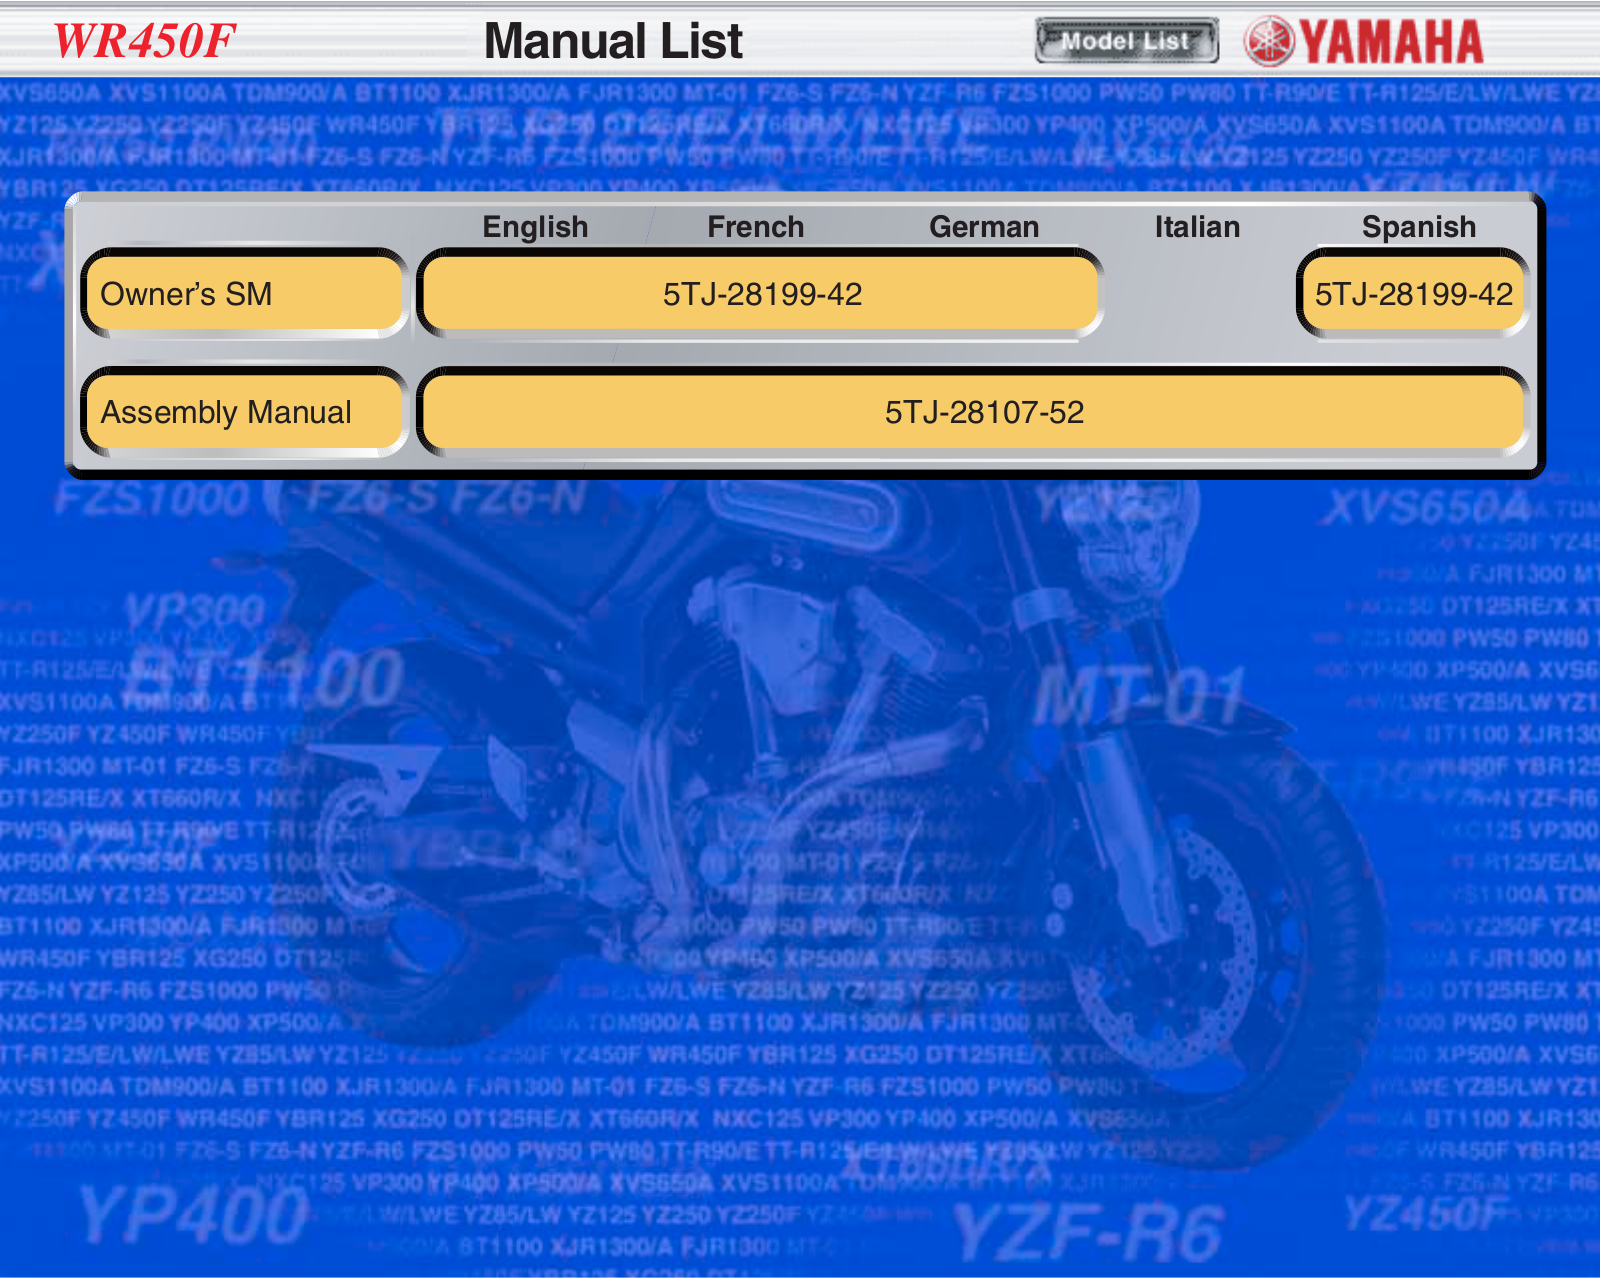 Yamaha WR450F User Manual